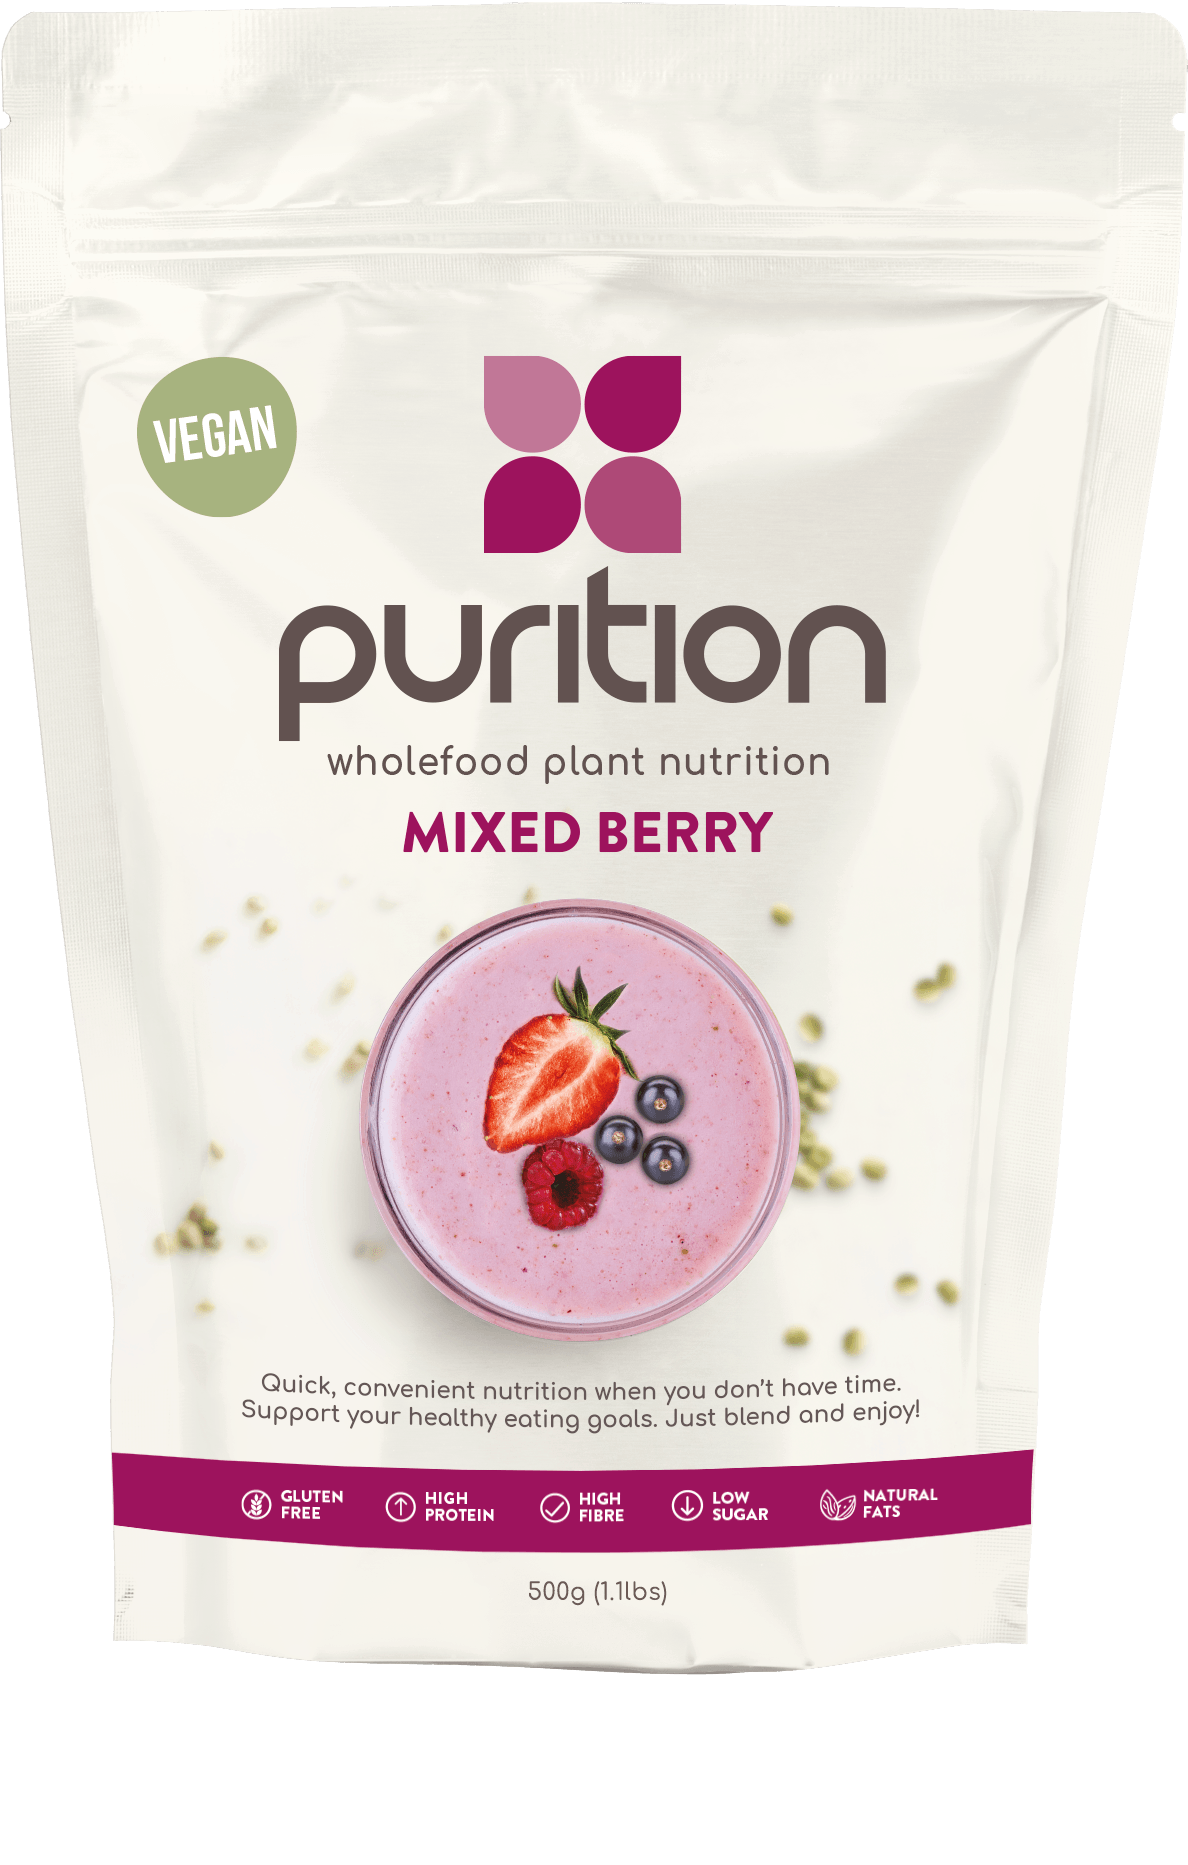 Vegan Mixed Berry 500g - Purition UK